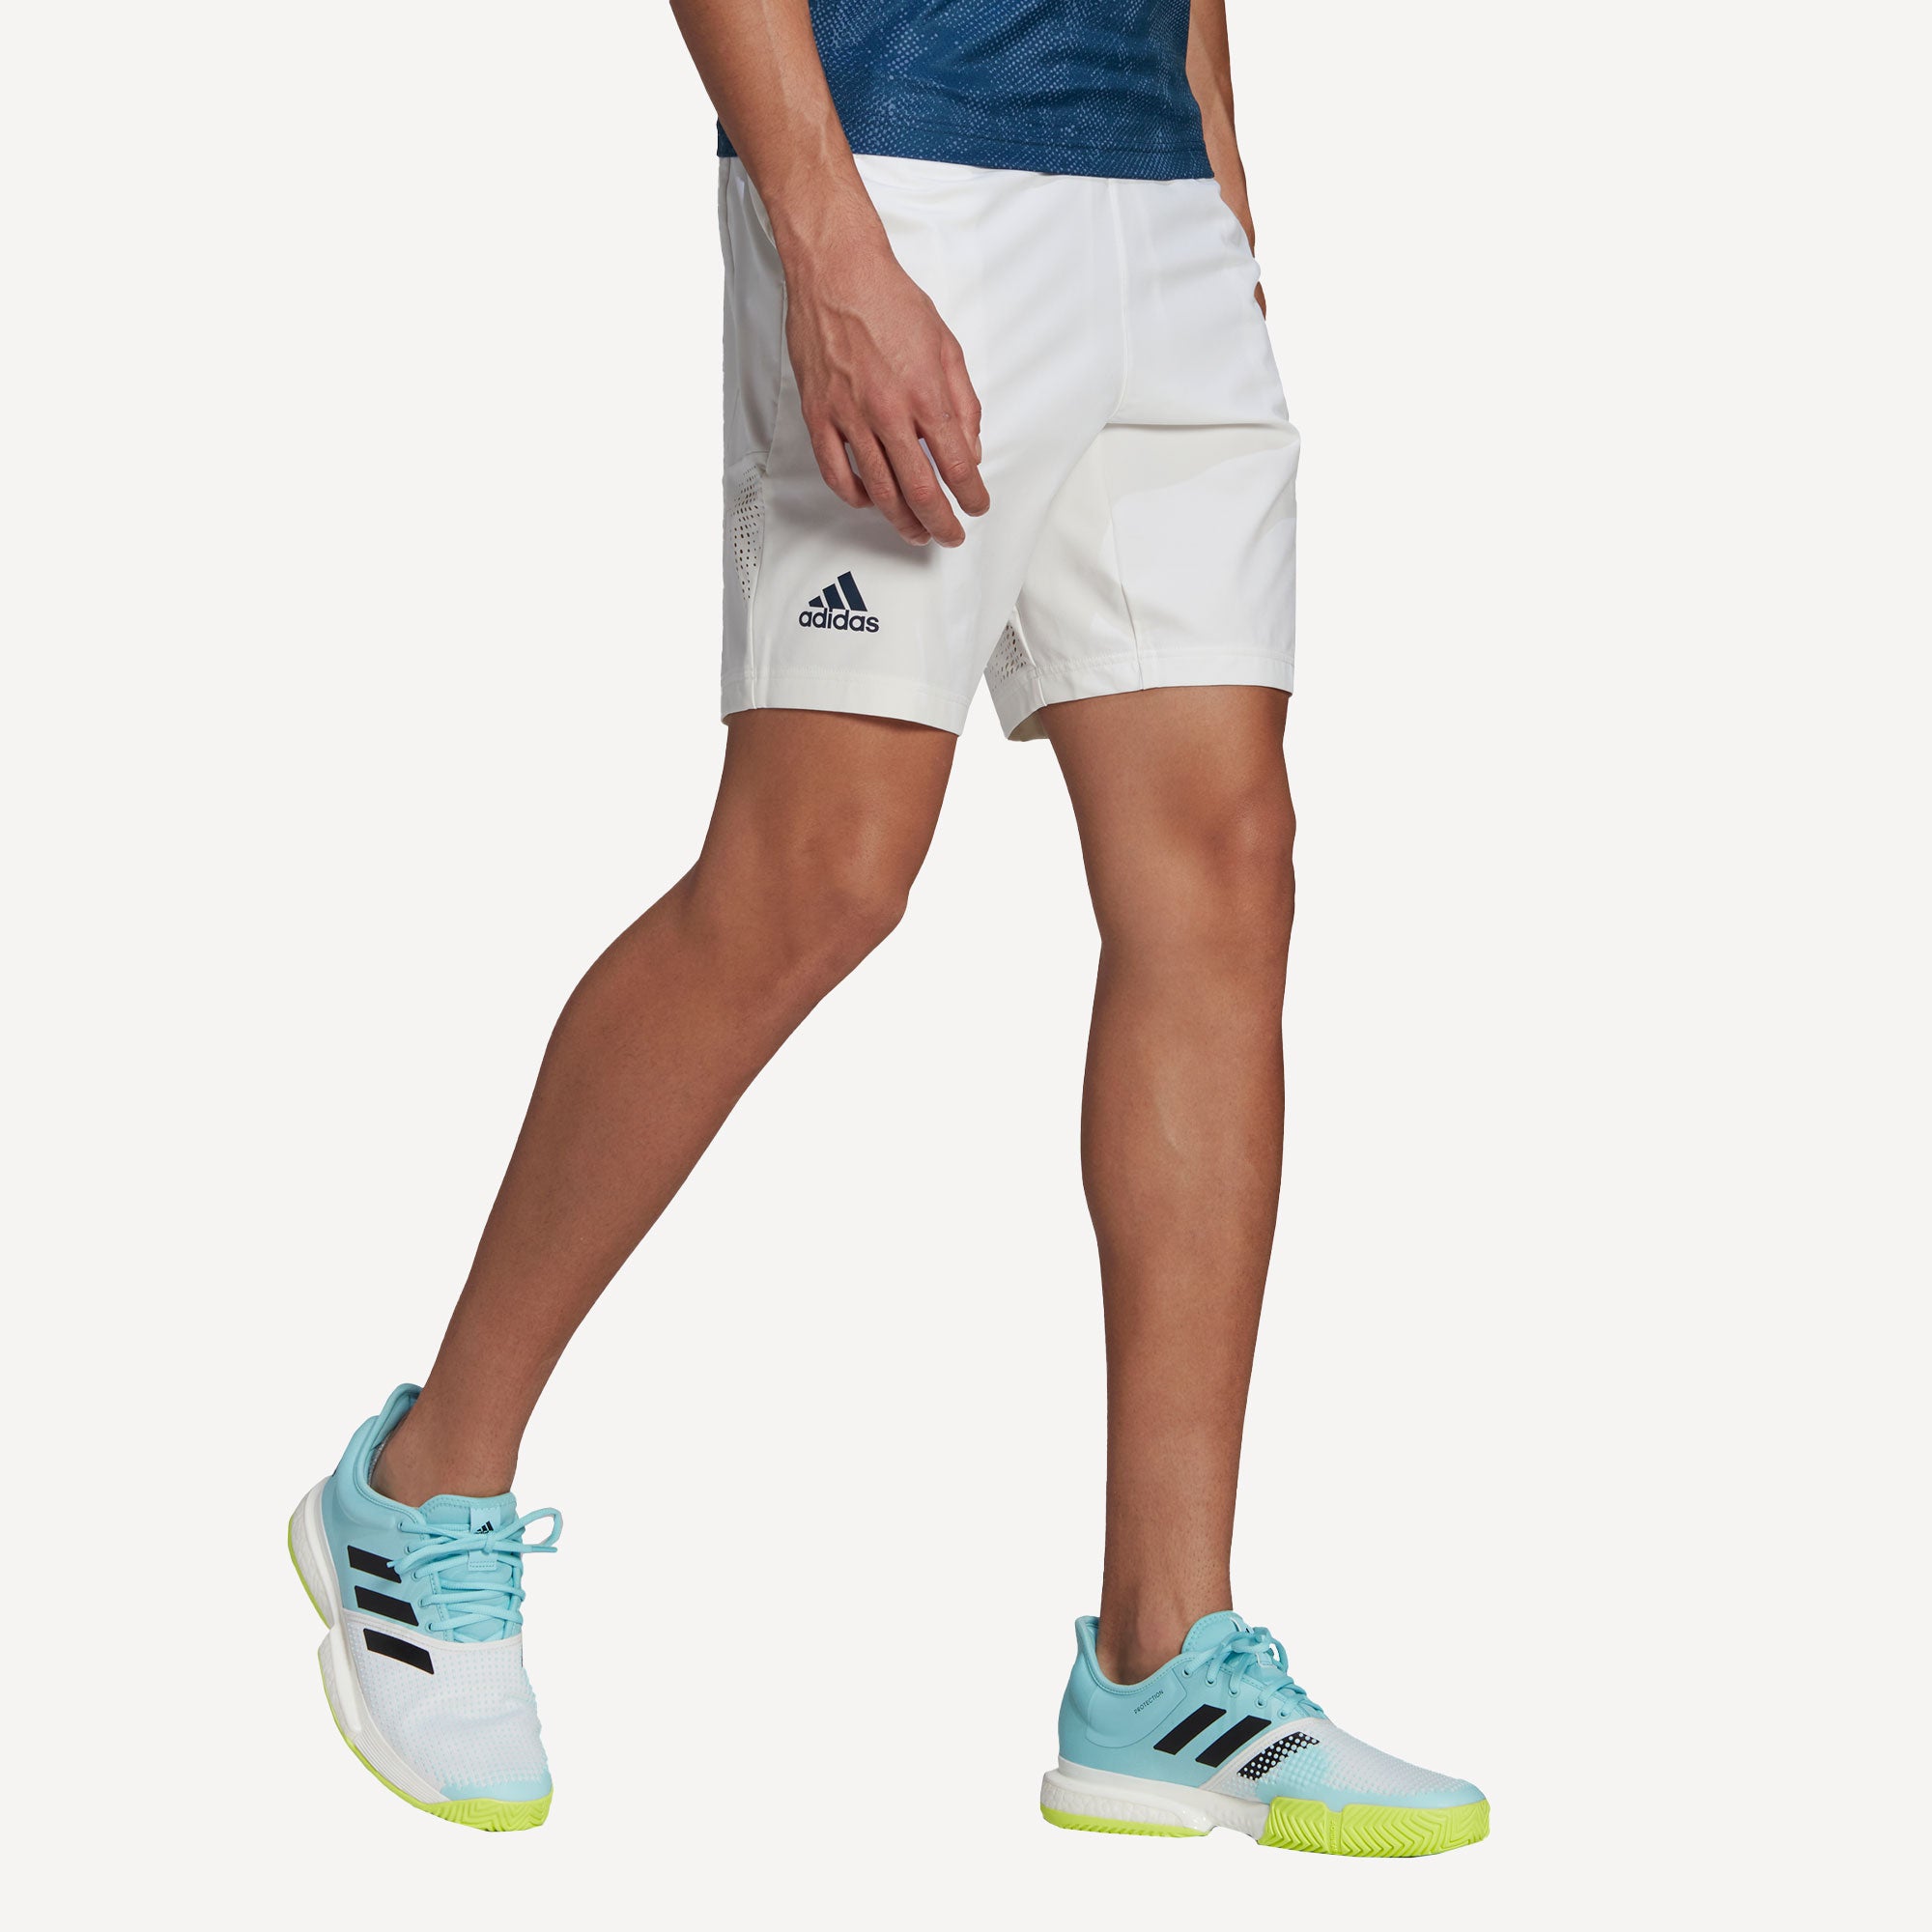 adidas Ergo Primeblue Men's 9-Inch Tennis Shorts White (3)